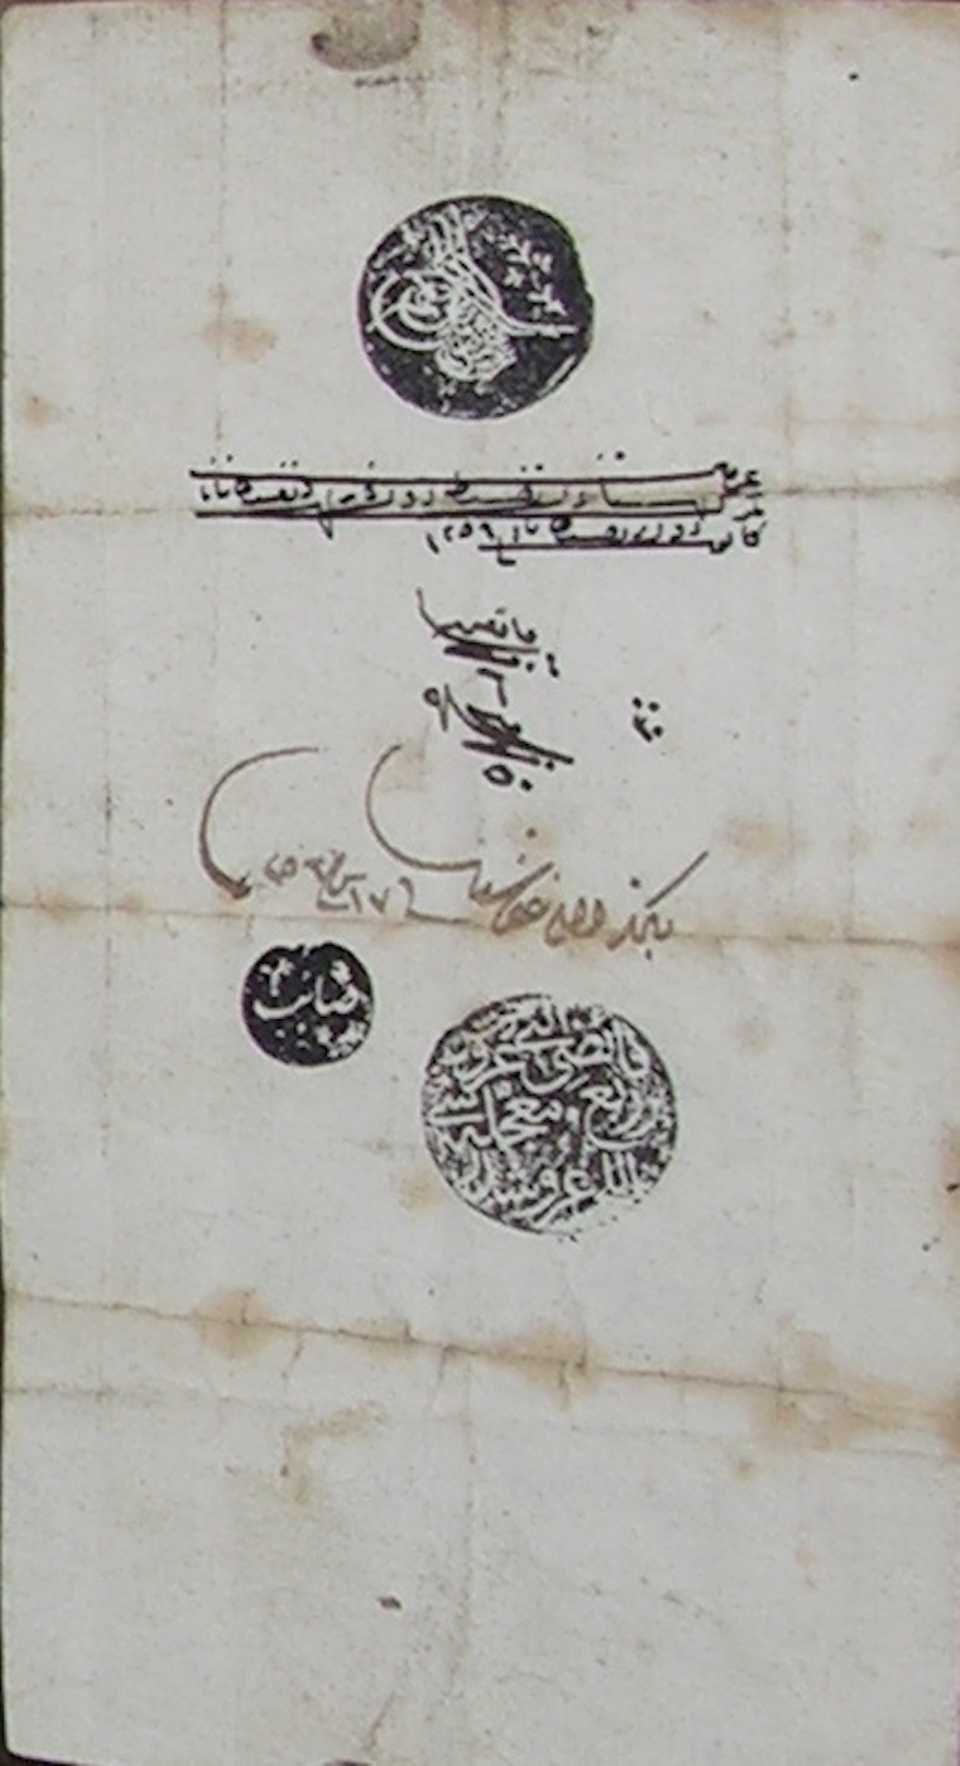 A handwritten Ottoman banknote worth 50 kurush.